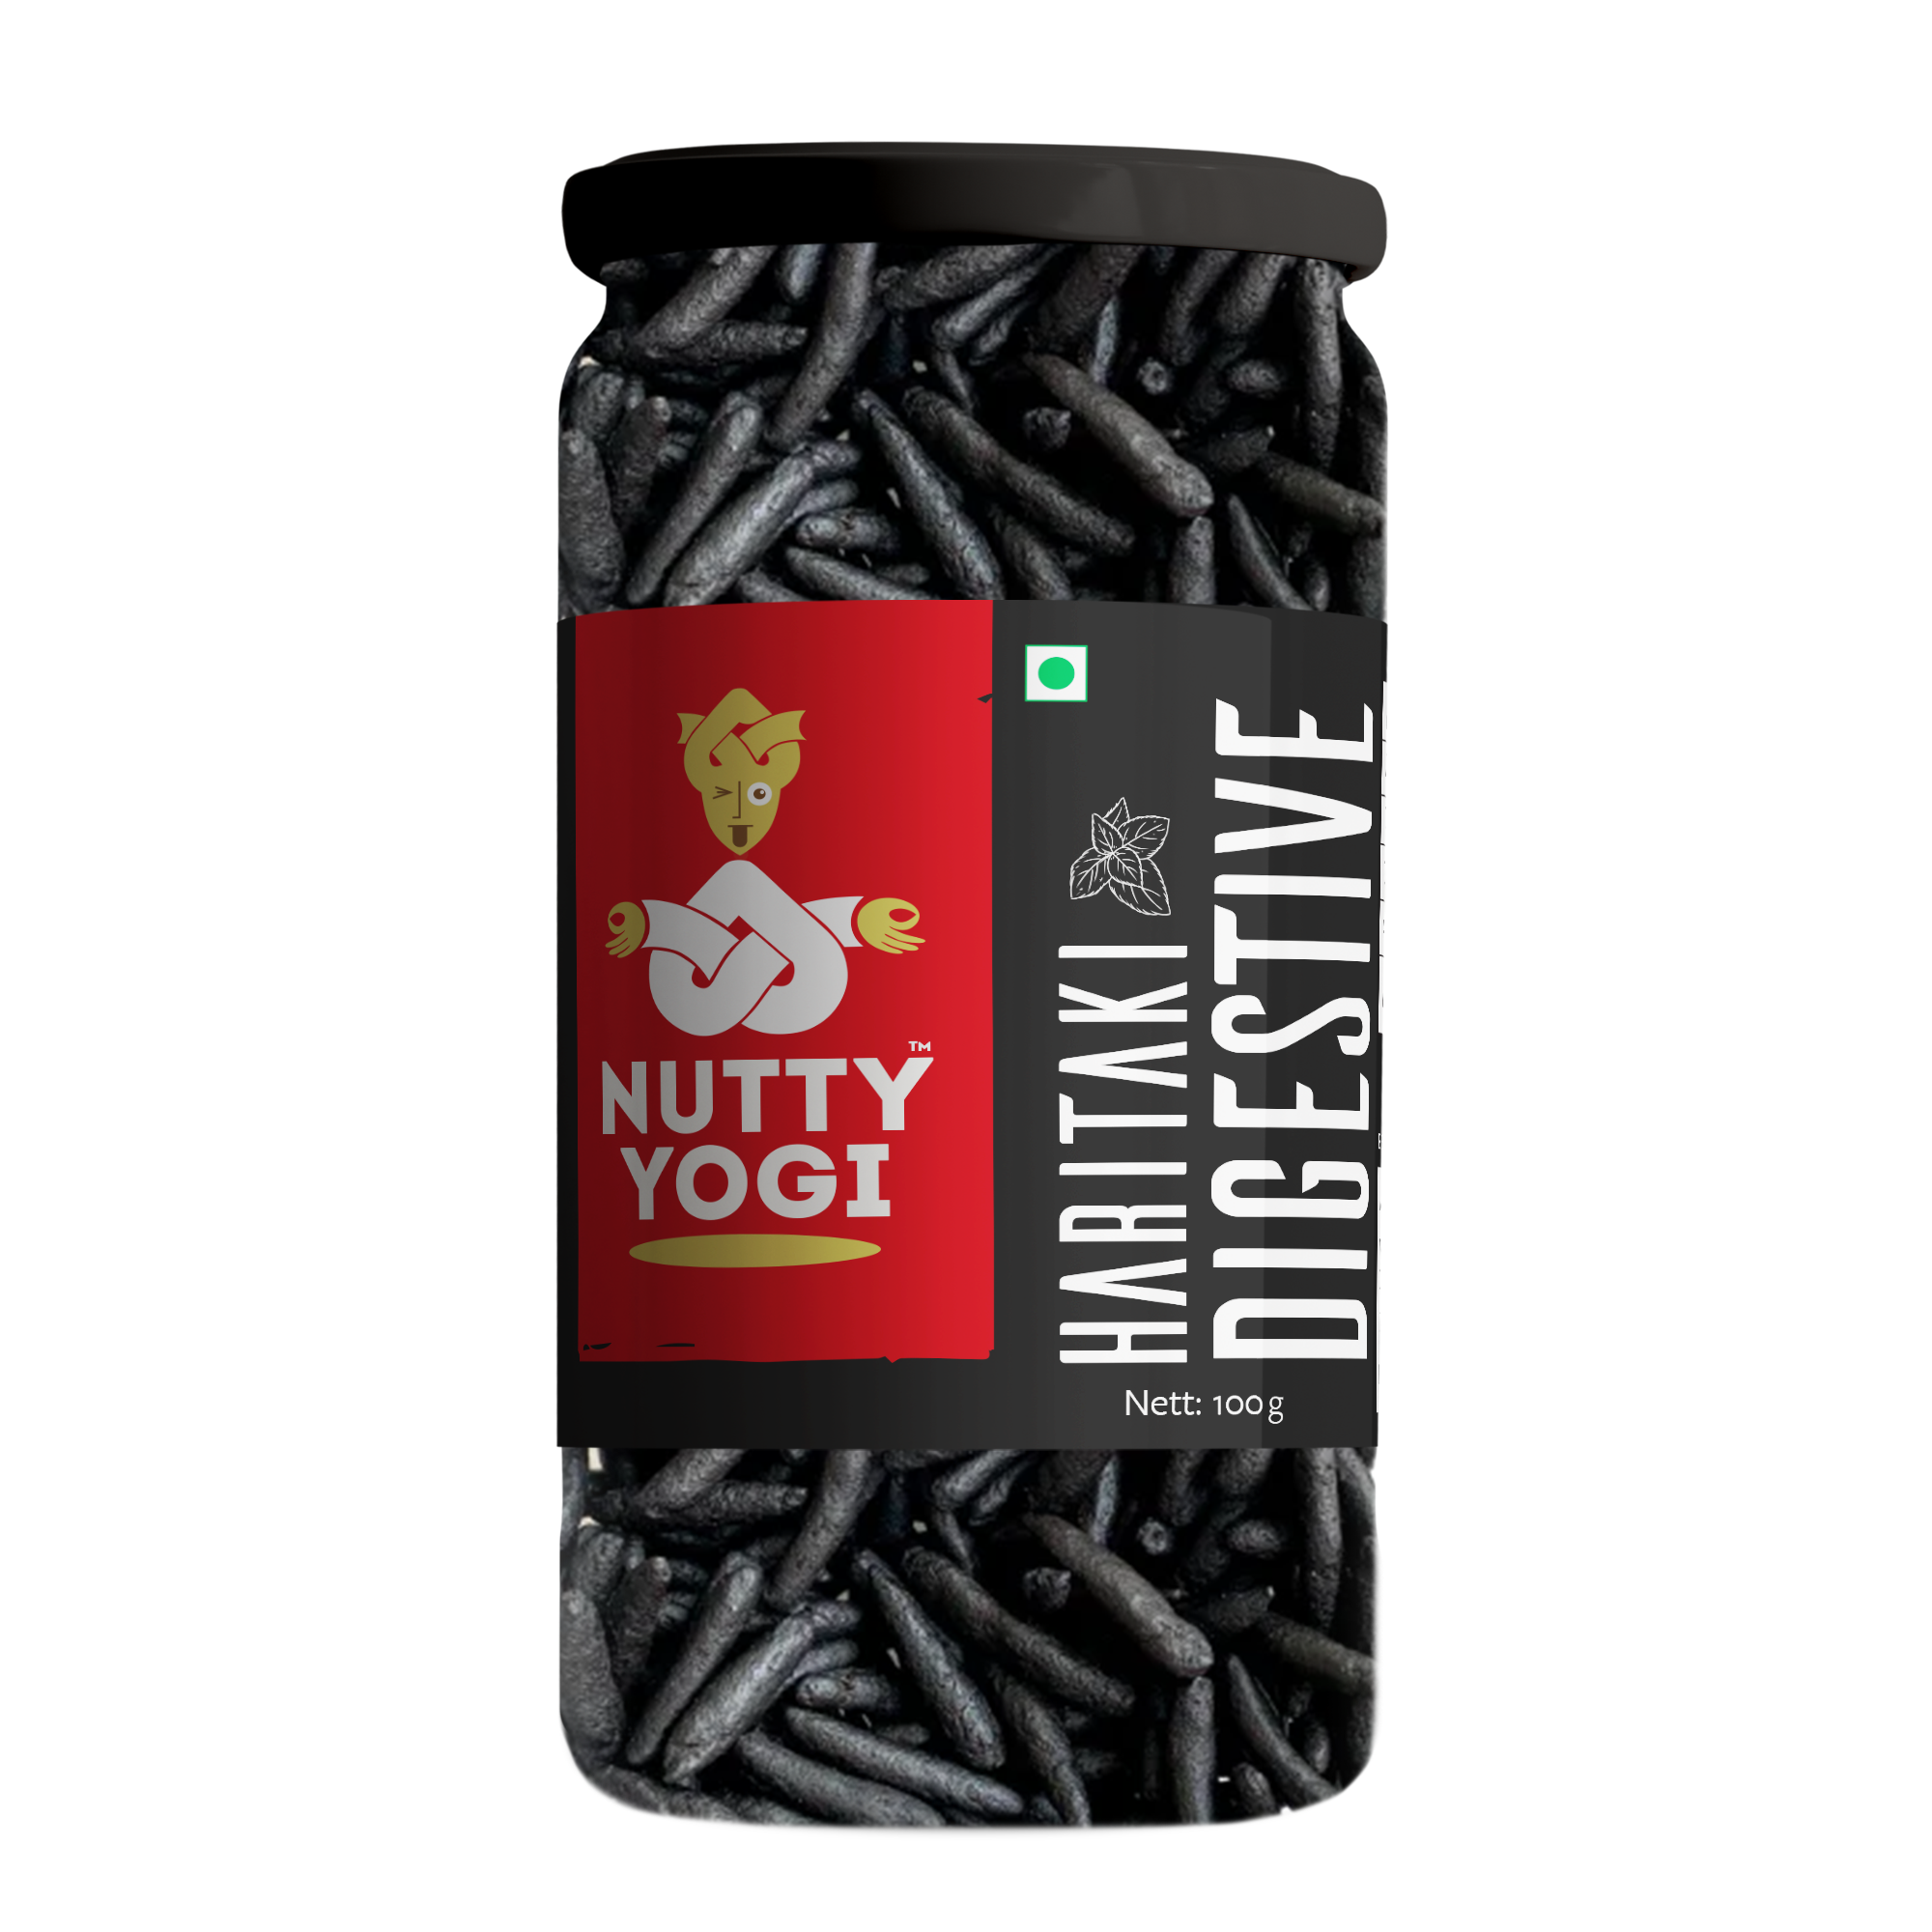 Nutty Yogi Haritake - Harad Digestive 100g